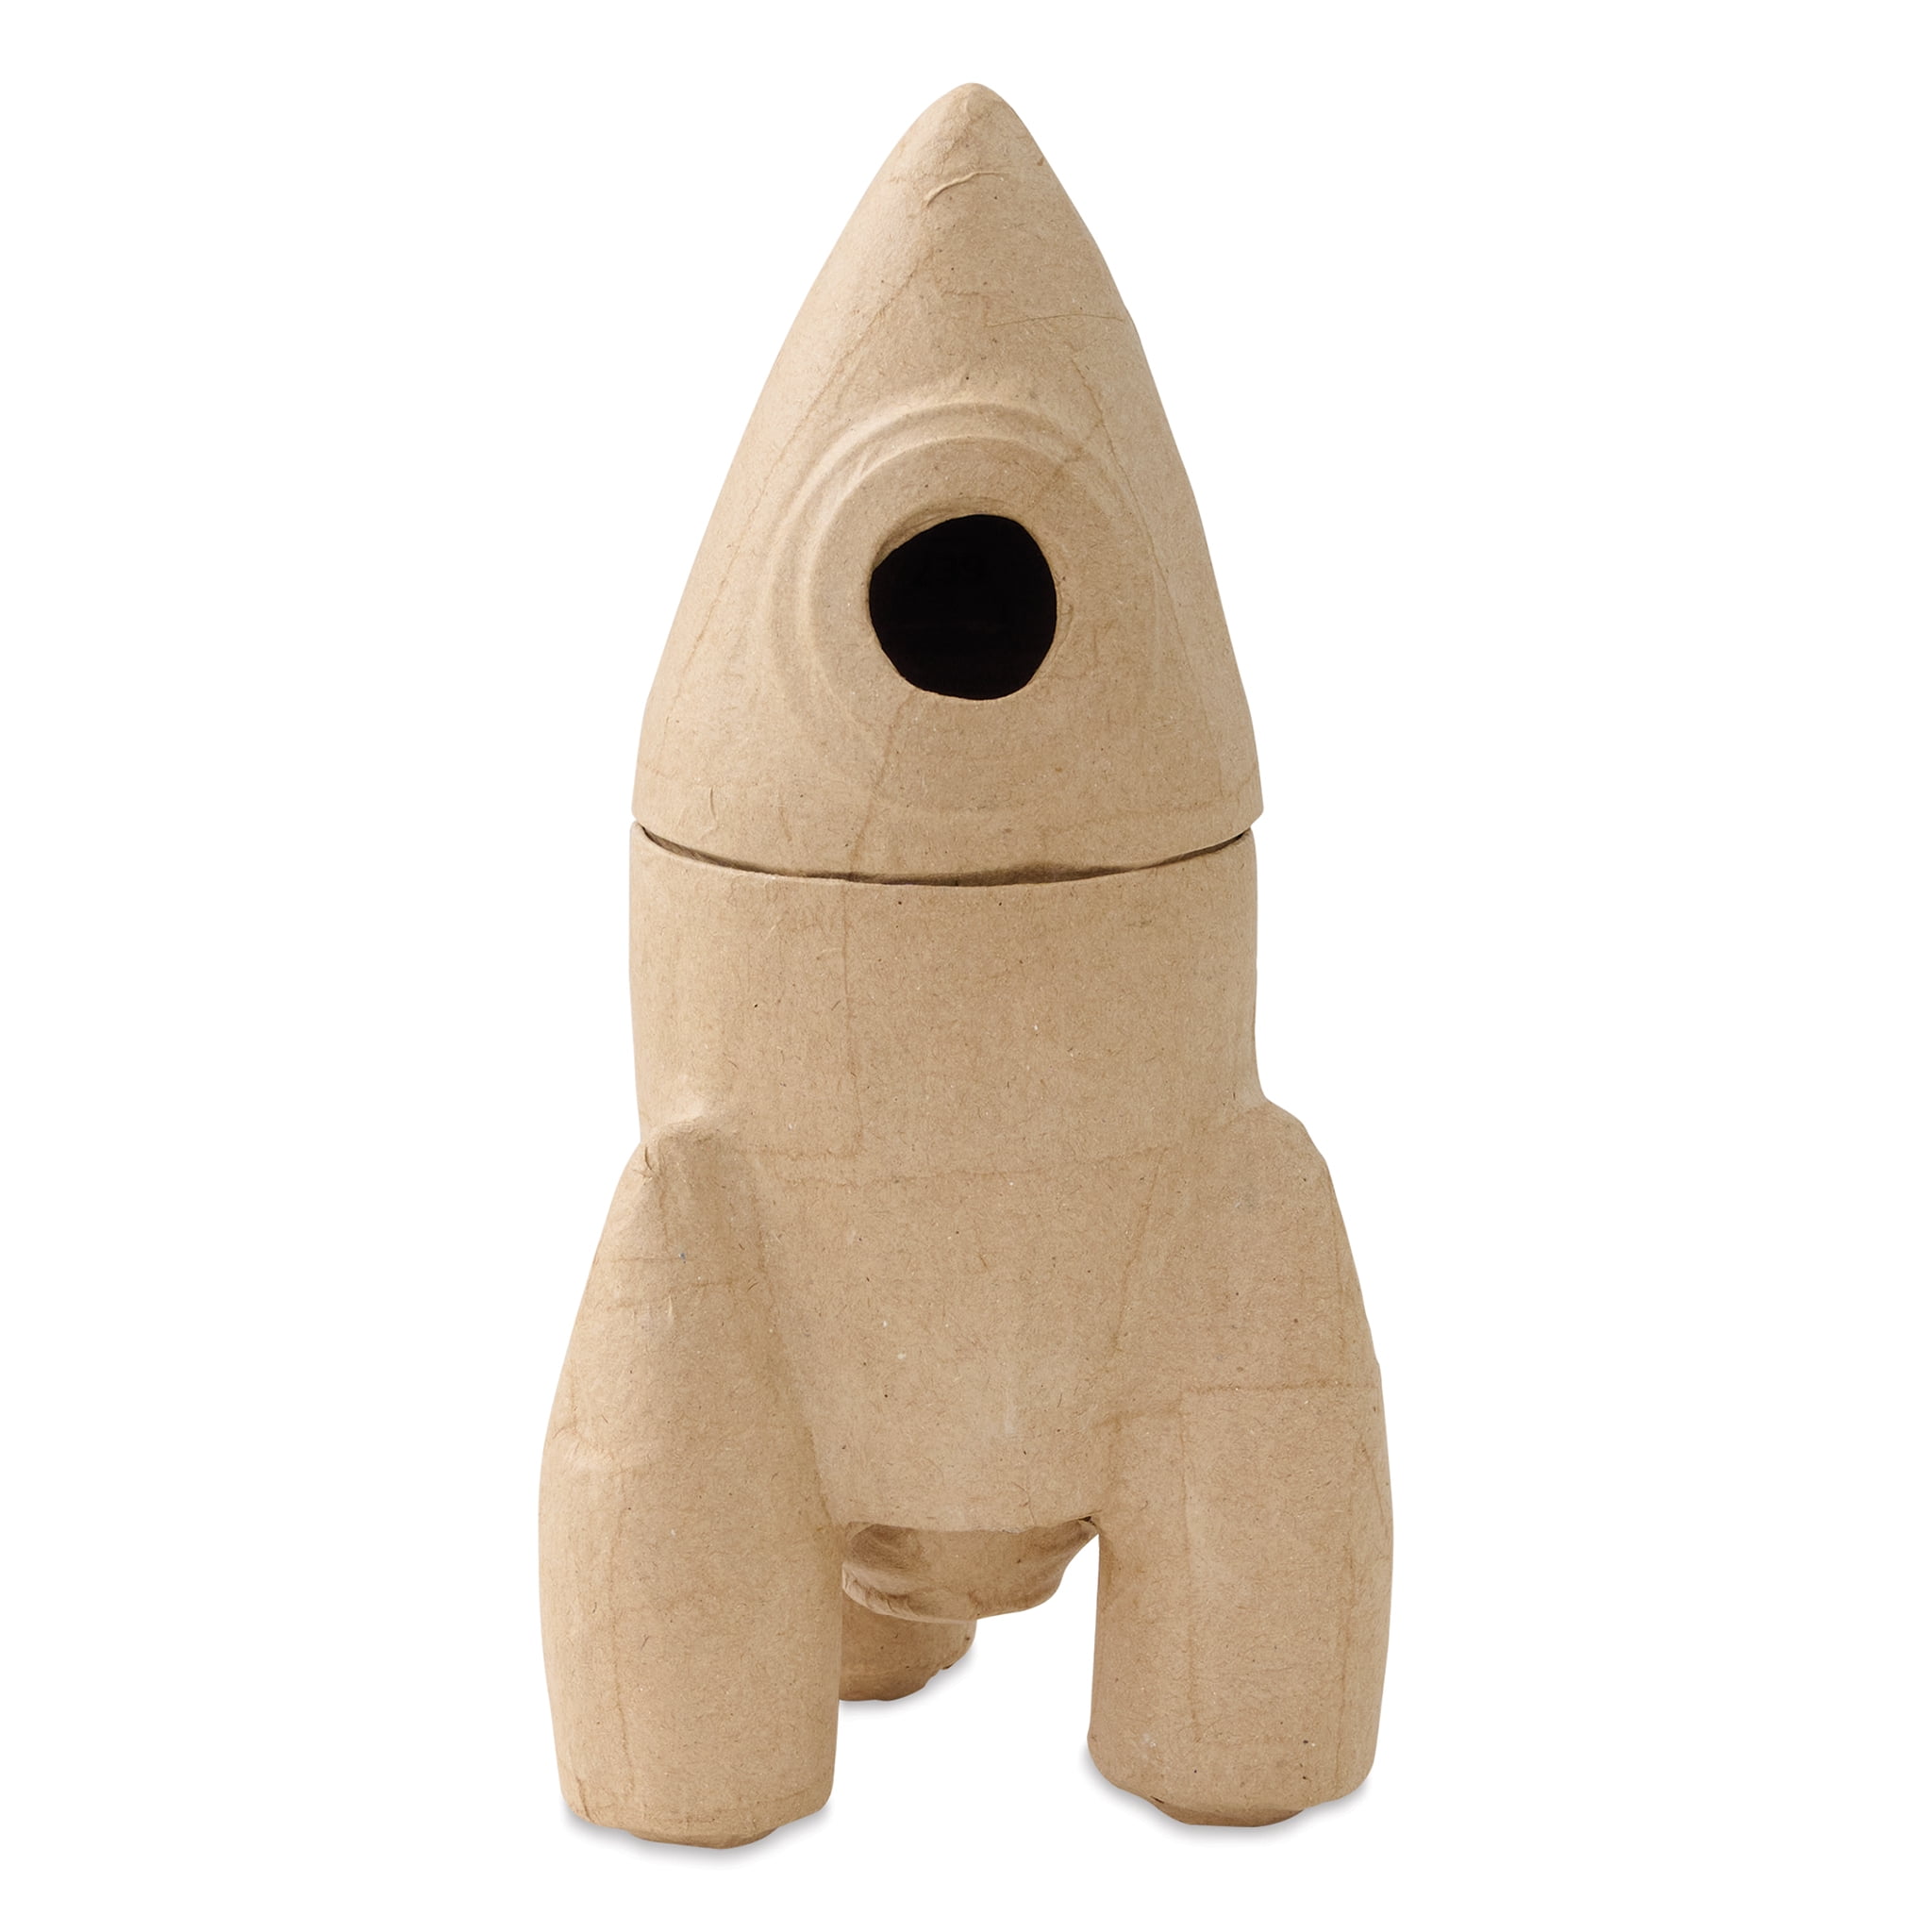 Rocket Ship Kids Cross Stitch Kit – Geppetto's Toy Box